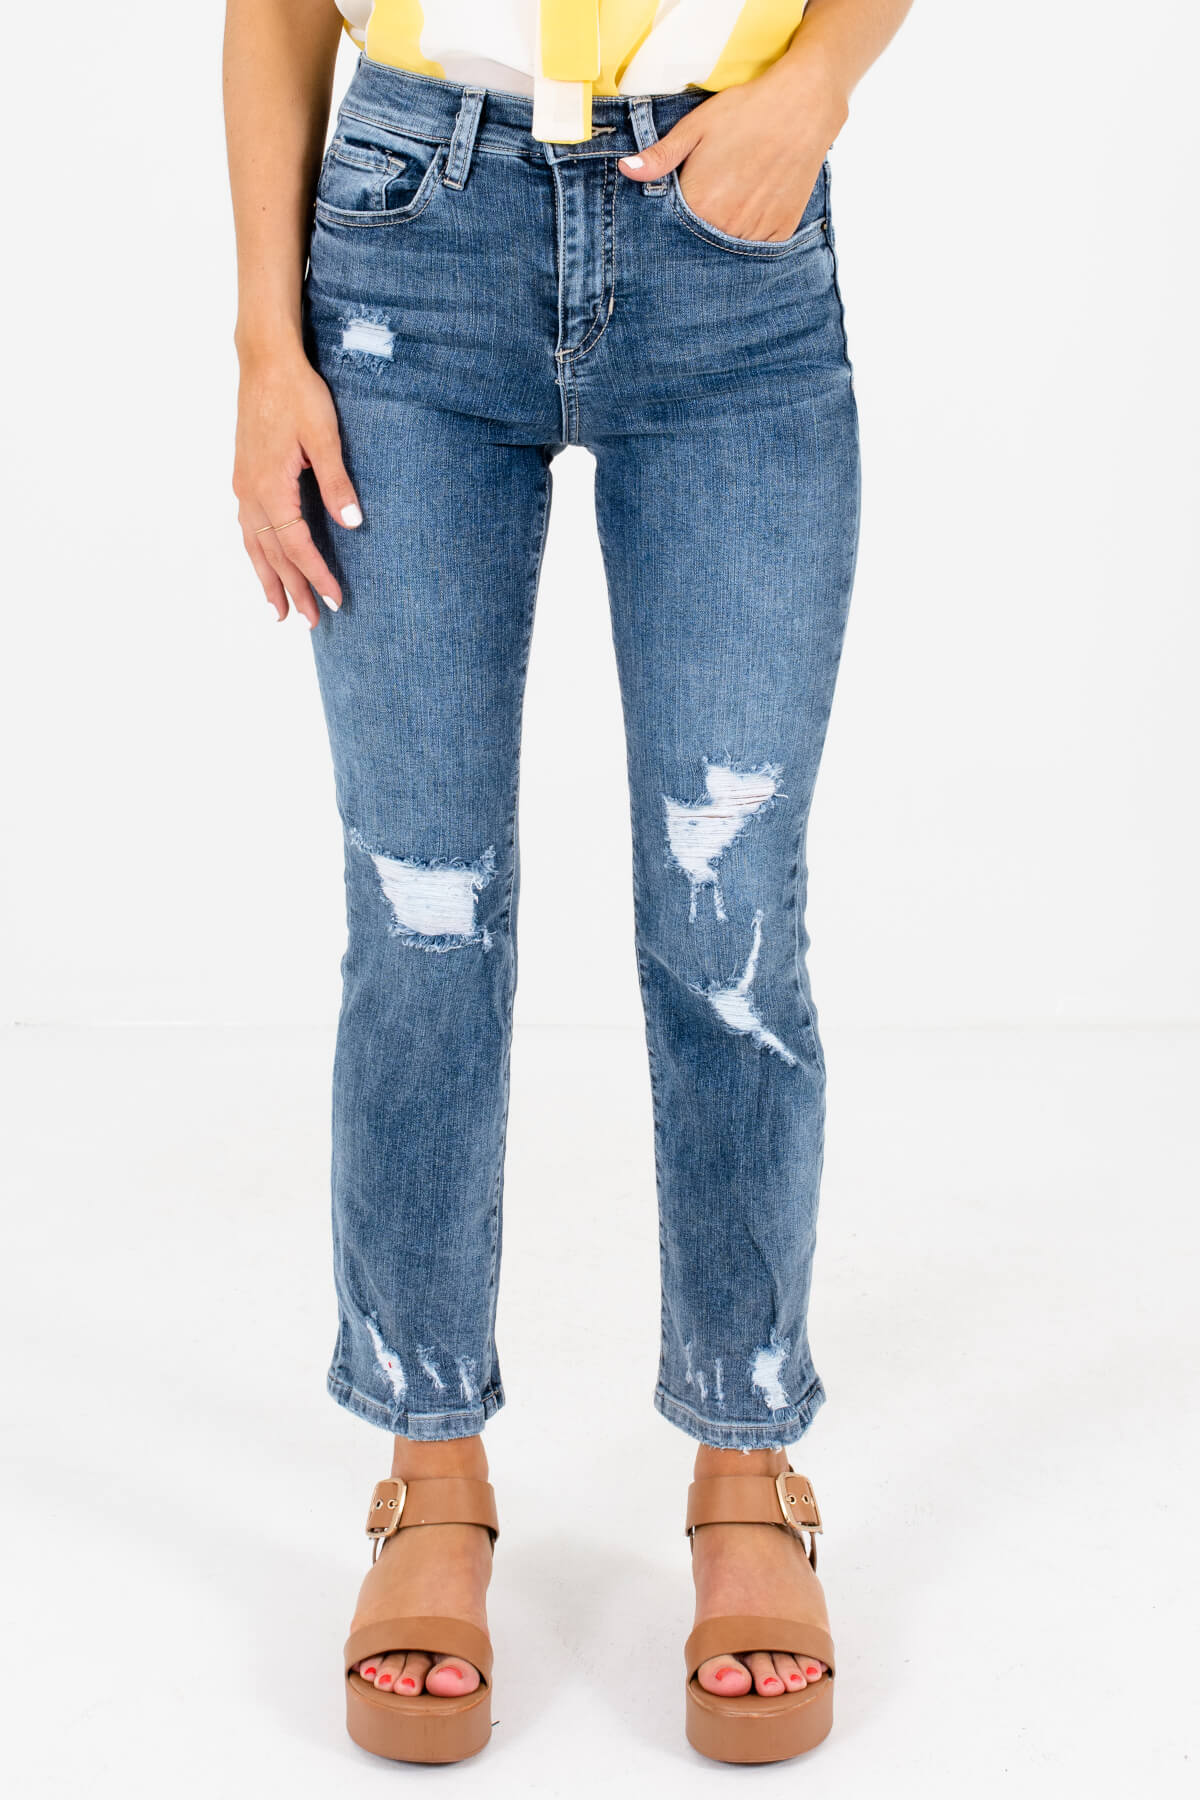 Medium Wash Blue Denim Distressed Detailing Boutique Jeans for Women